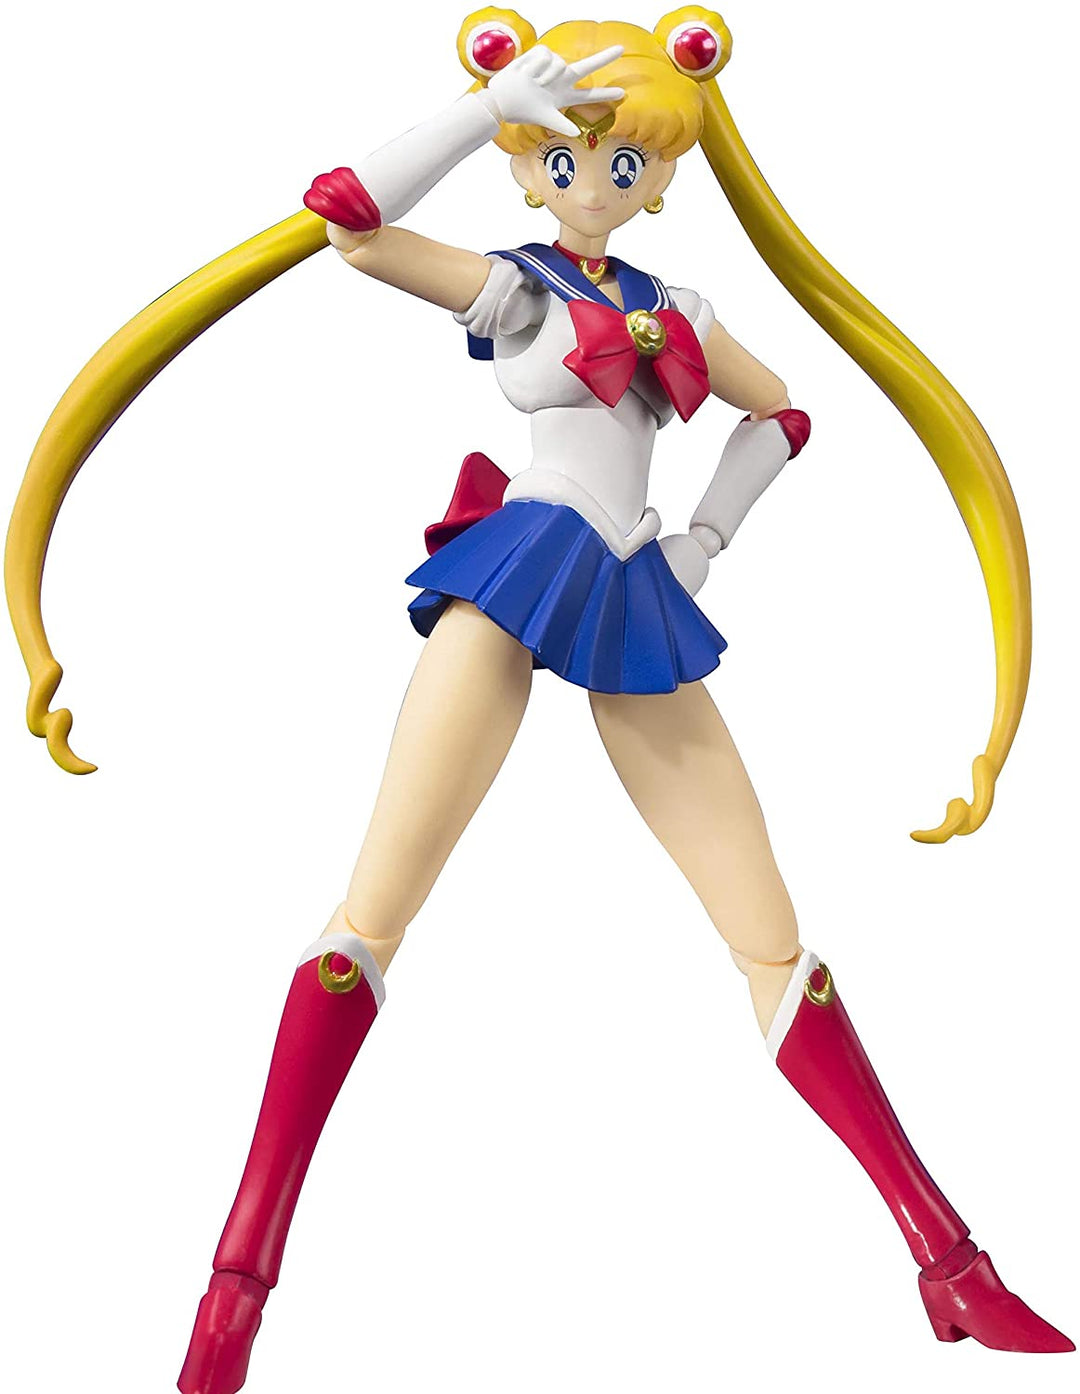 Bandai Tamashii Nations S.H. Figuarts Pretty Guardian Sailor Moon Sailor Moon Anime Action Figure, Multi-colored, Standard